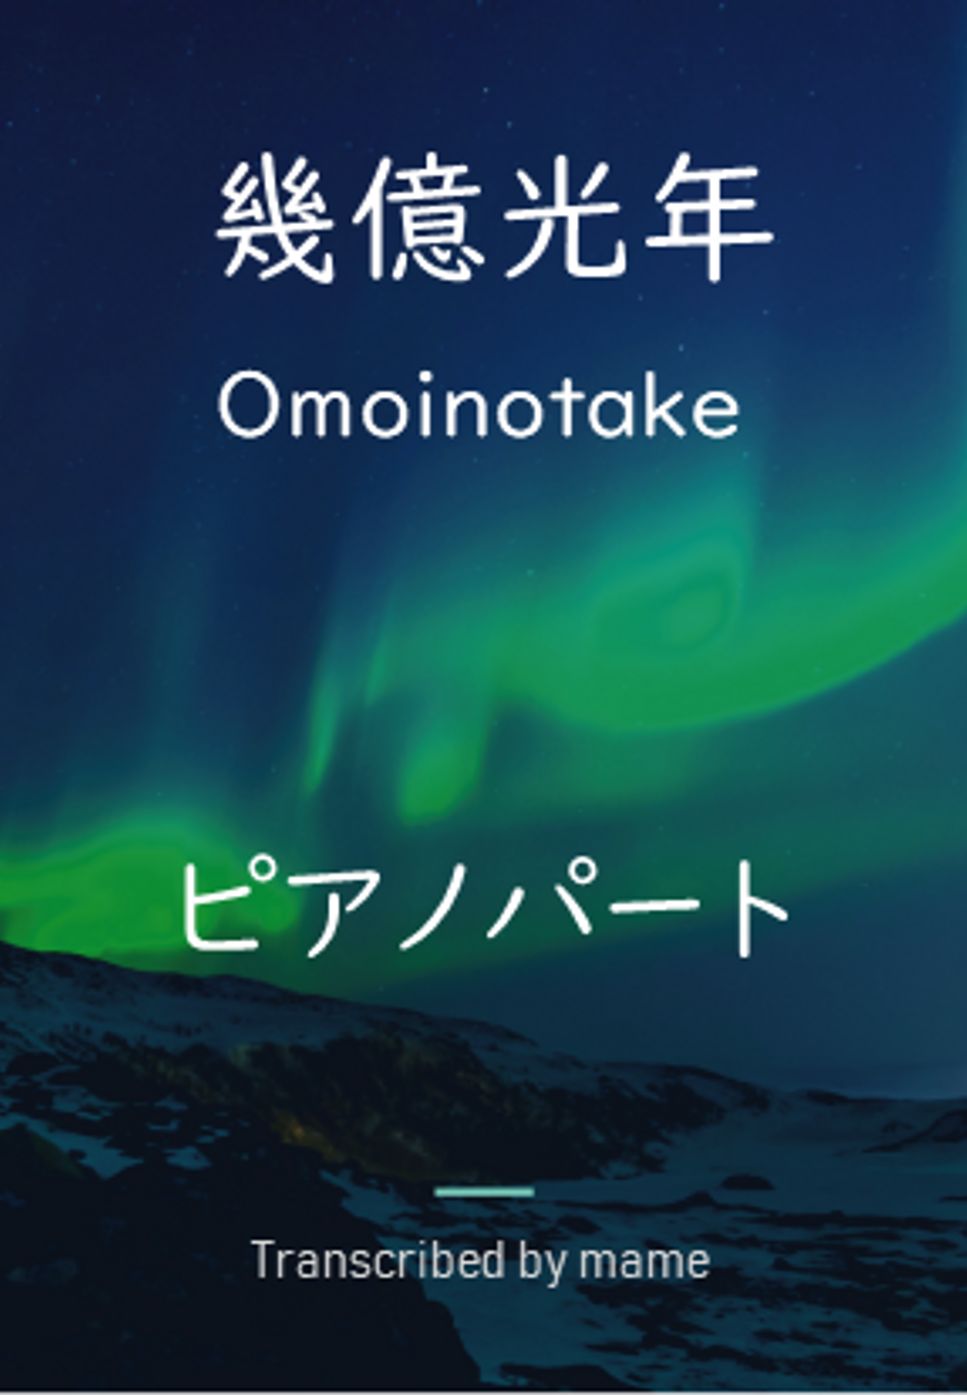 Omoinotake - 幾億光年 (piano part) by mame